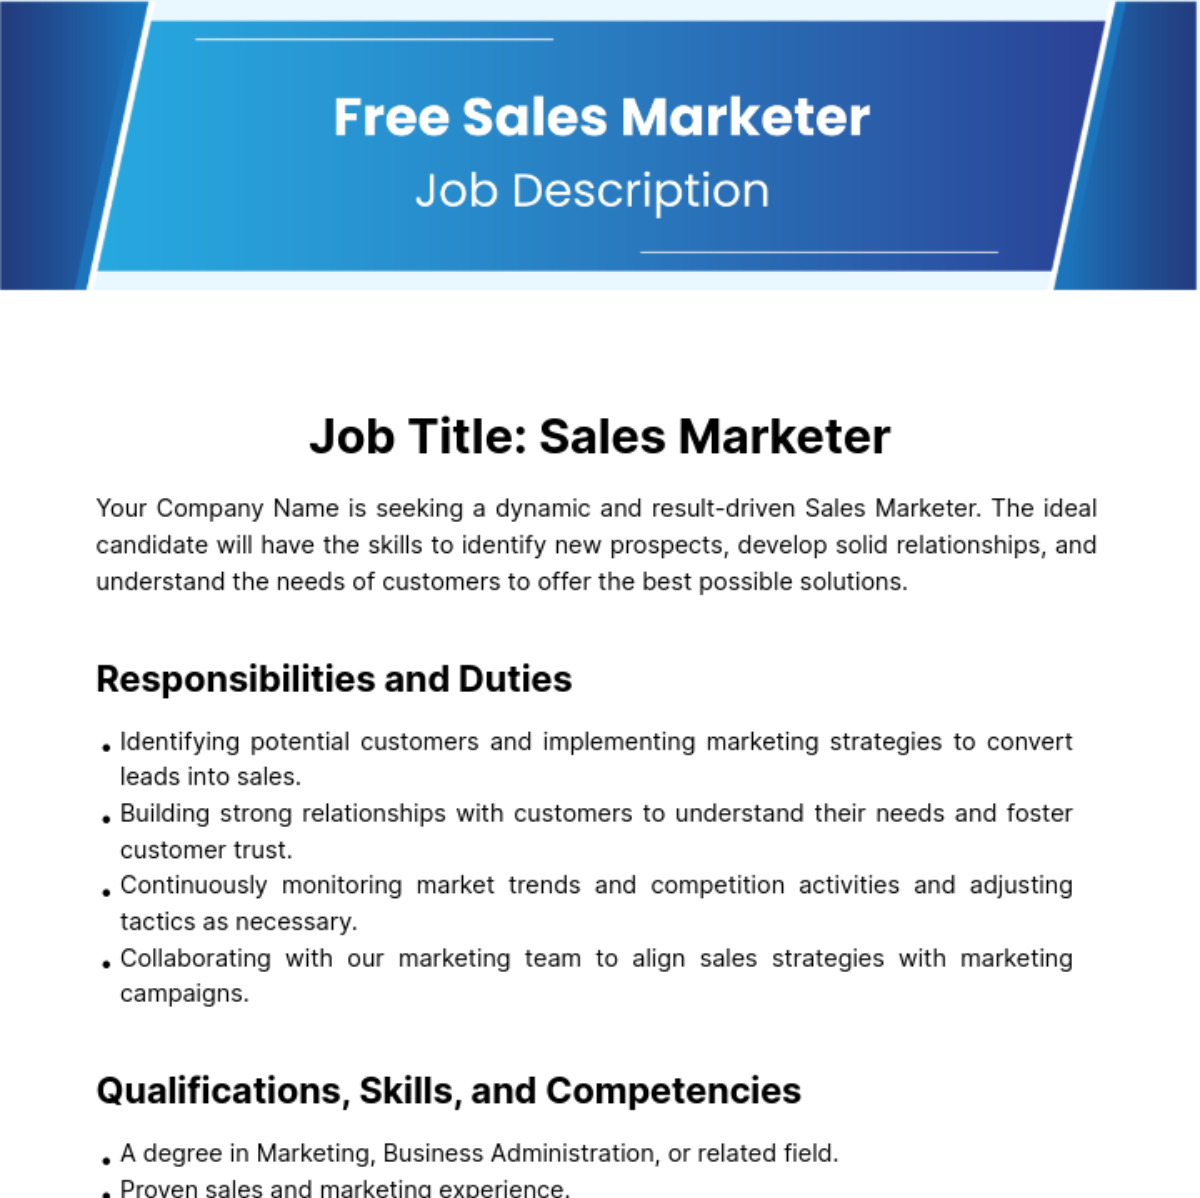 Free Sales Marketer Job Description Template